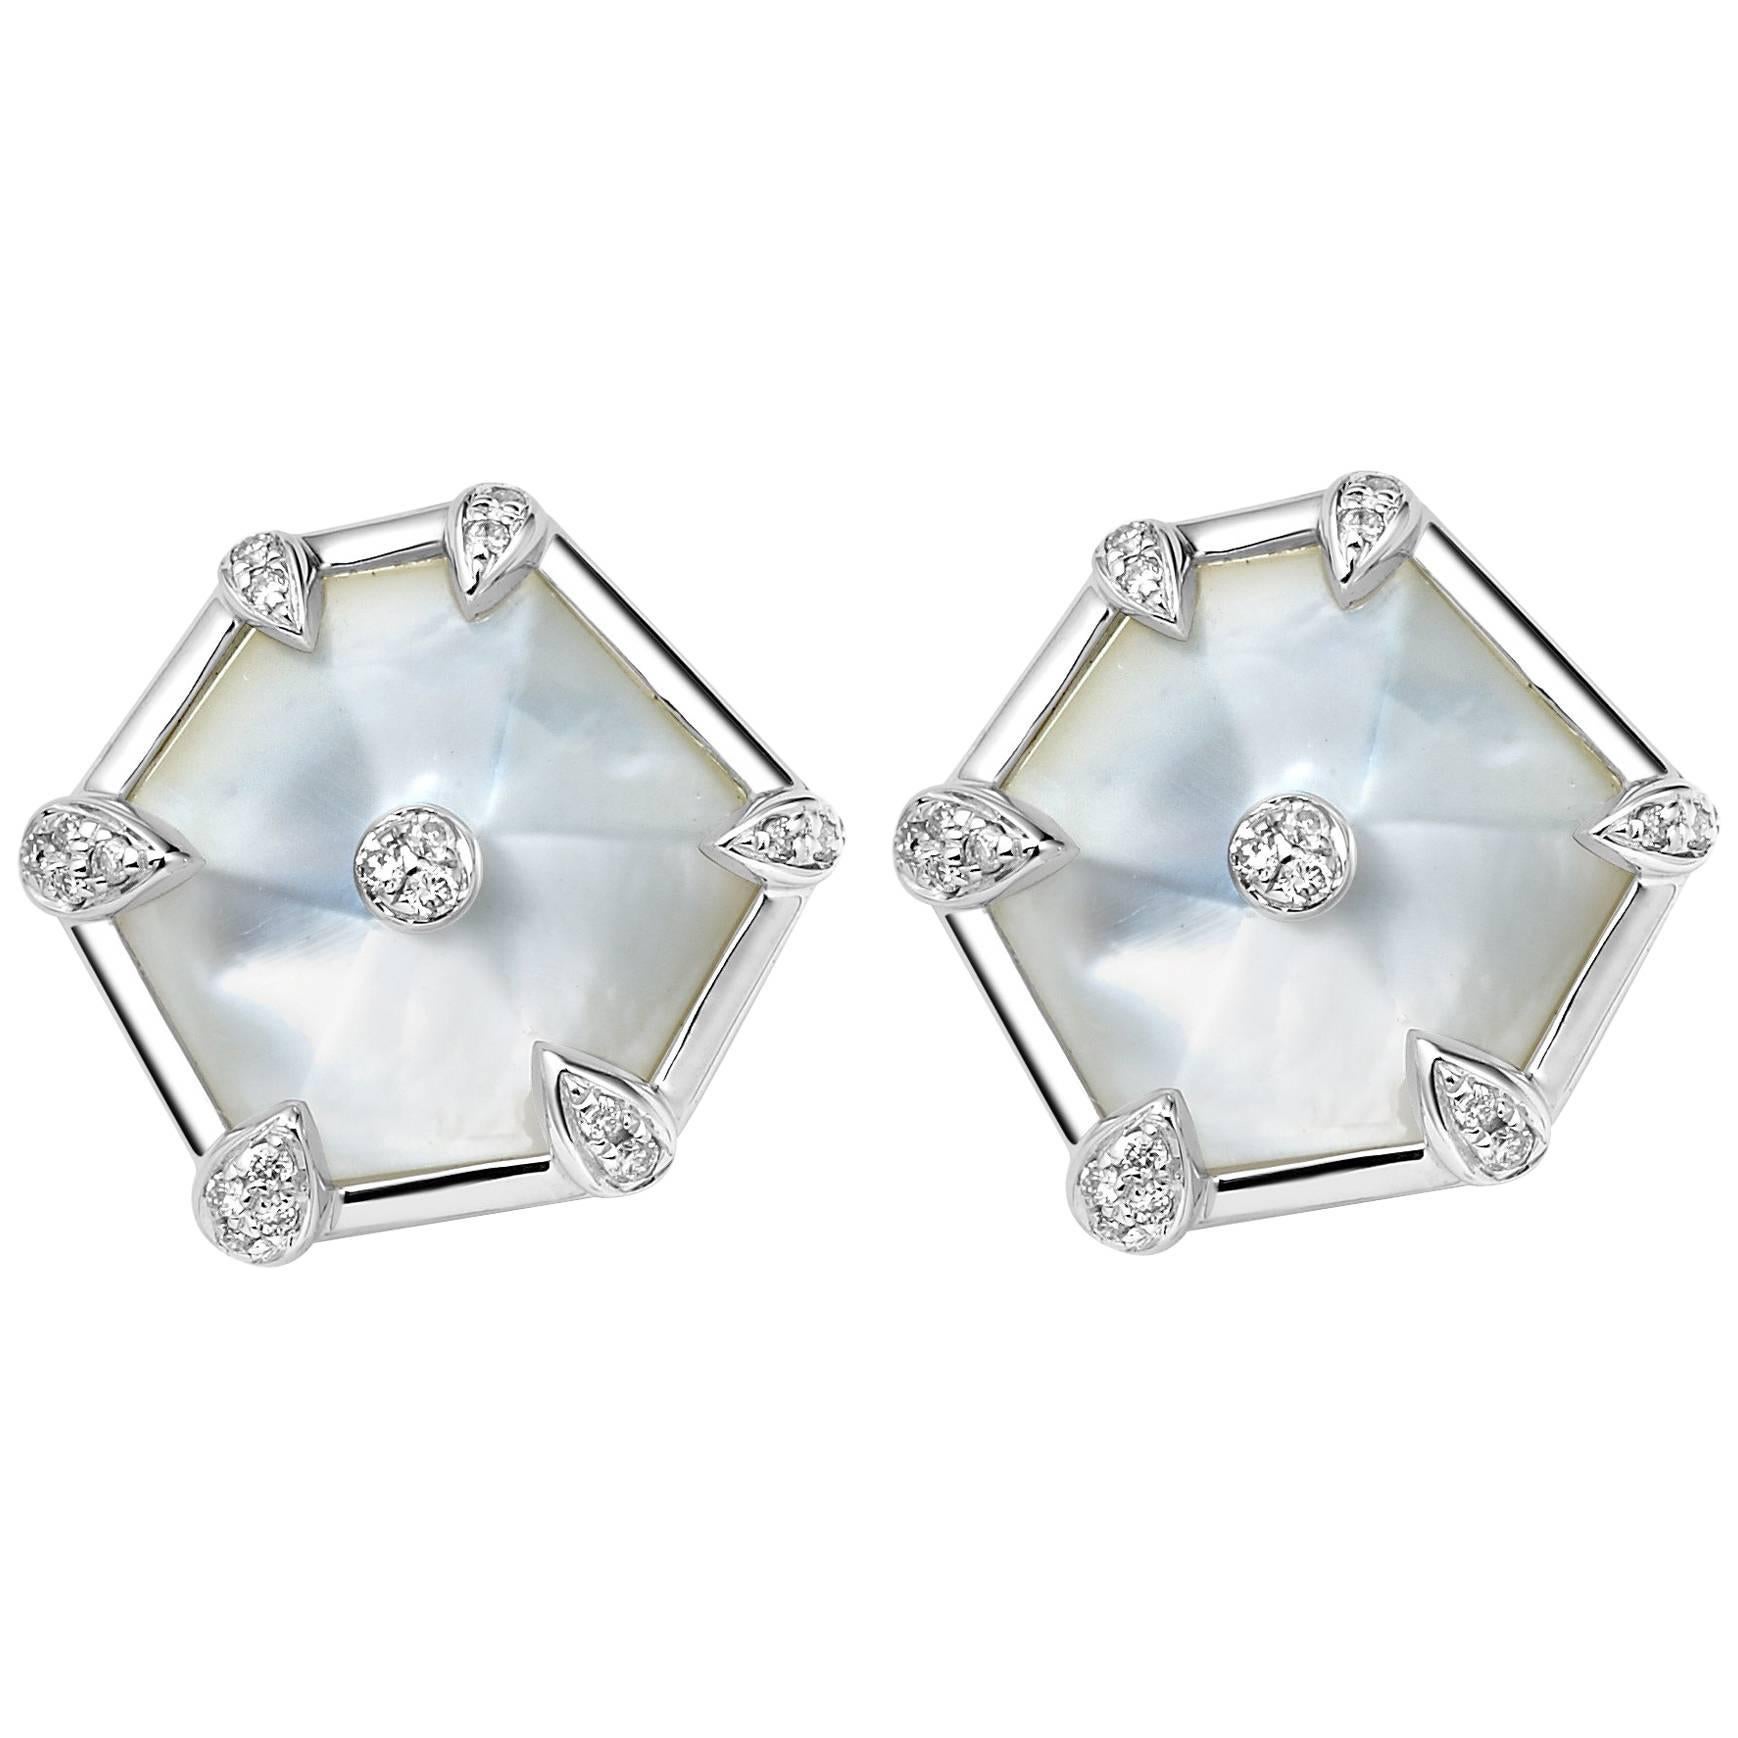 Fei Liu White Gold Hexagon Shape Stud Earrings with Diamonds, Mother-of-Pearl